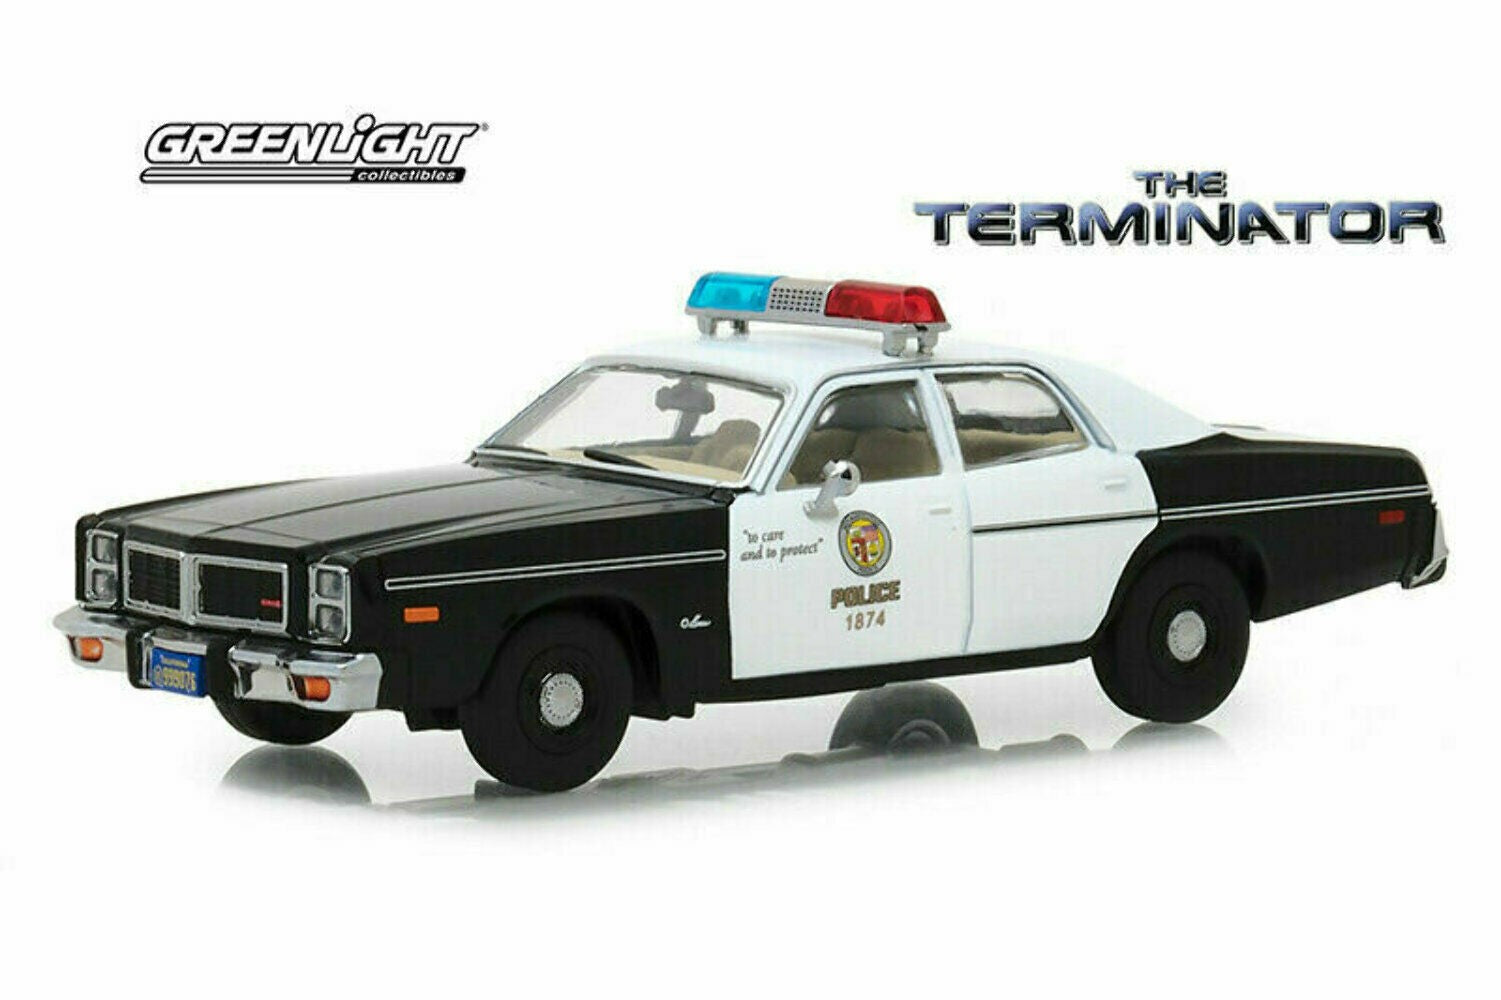  Greenlight - Hollywood The Terminator Dodge Monaco Police - 1977 - 1:18